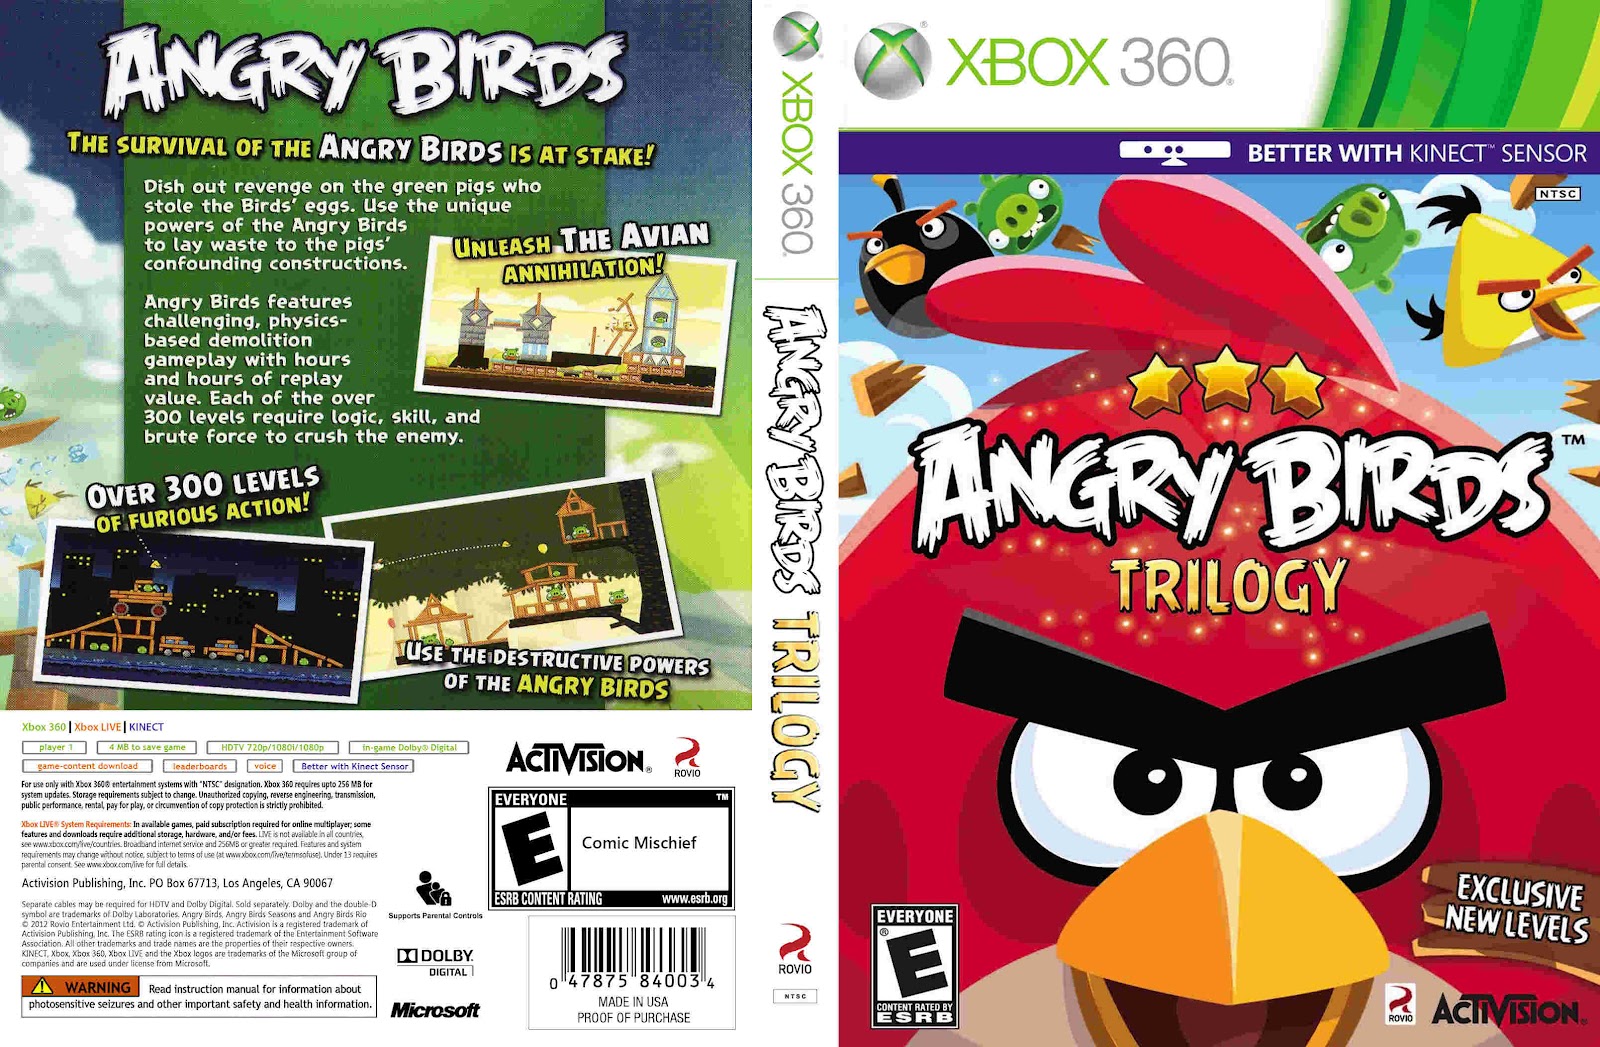 Descargar Juegos Xbox 360 Rgh Mega - Descar 6